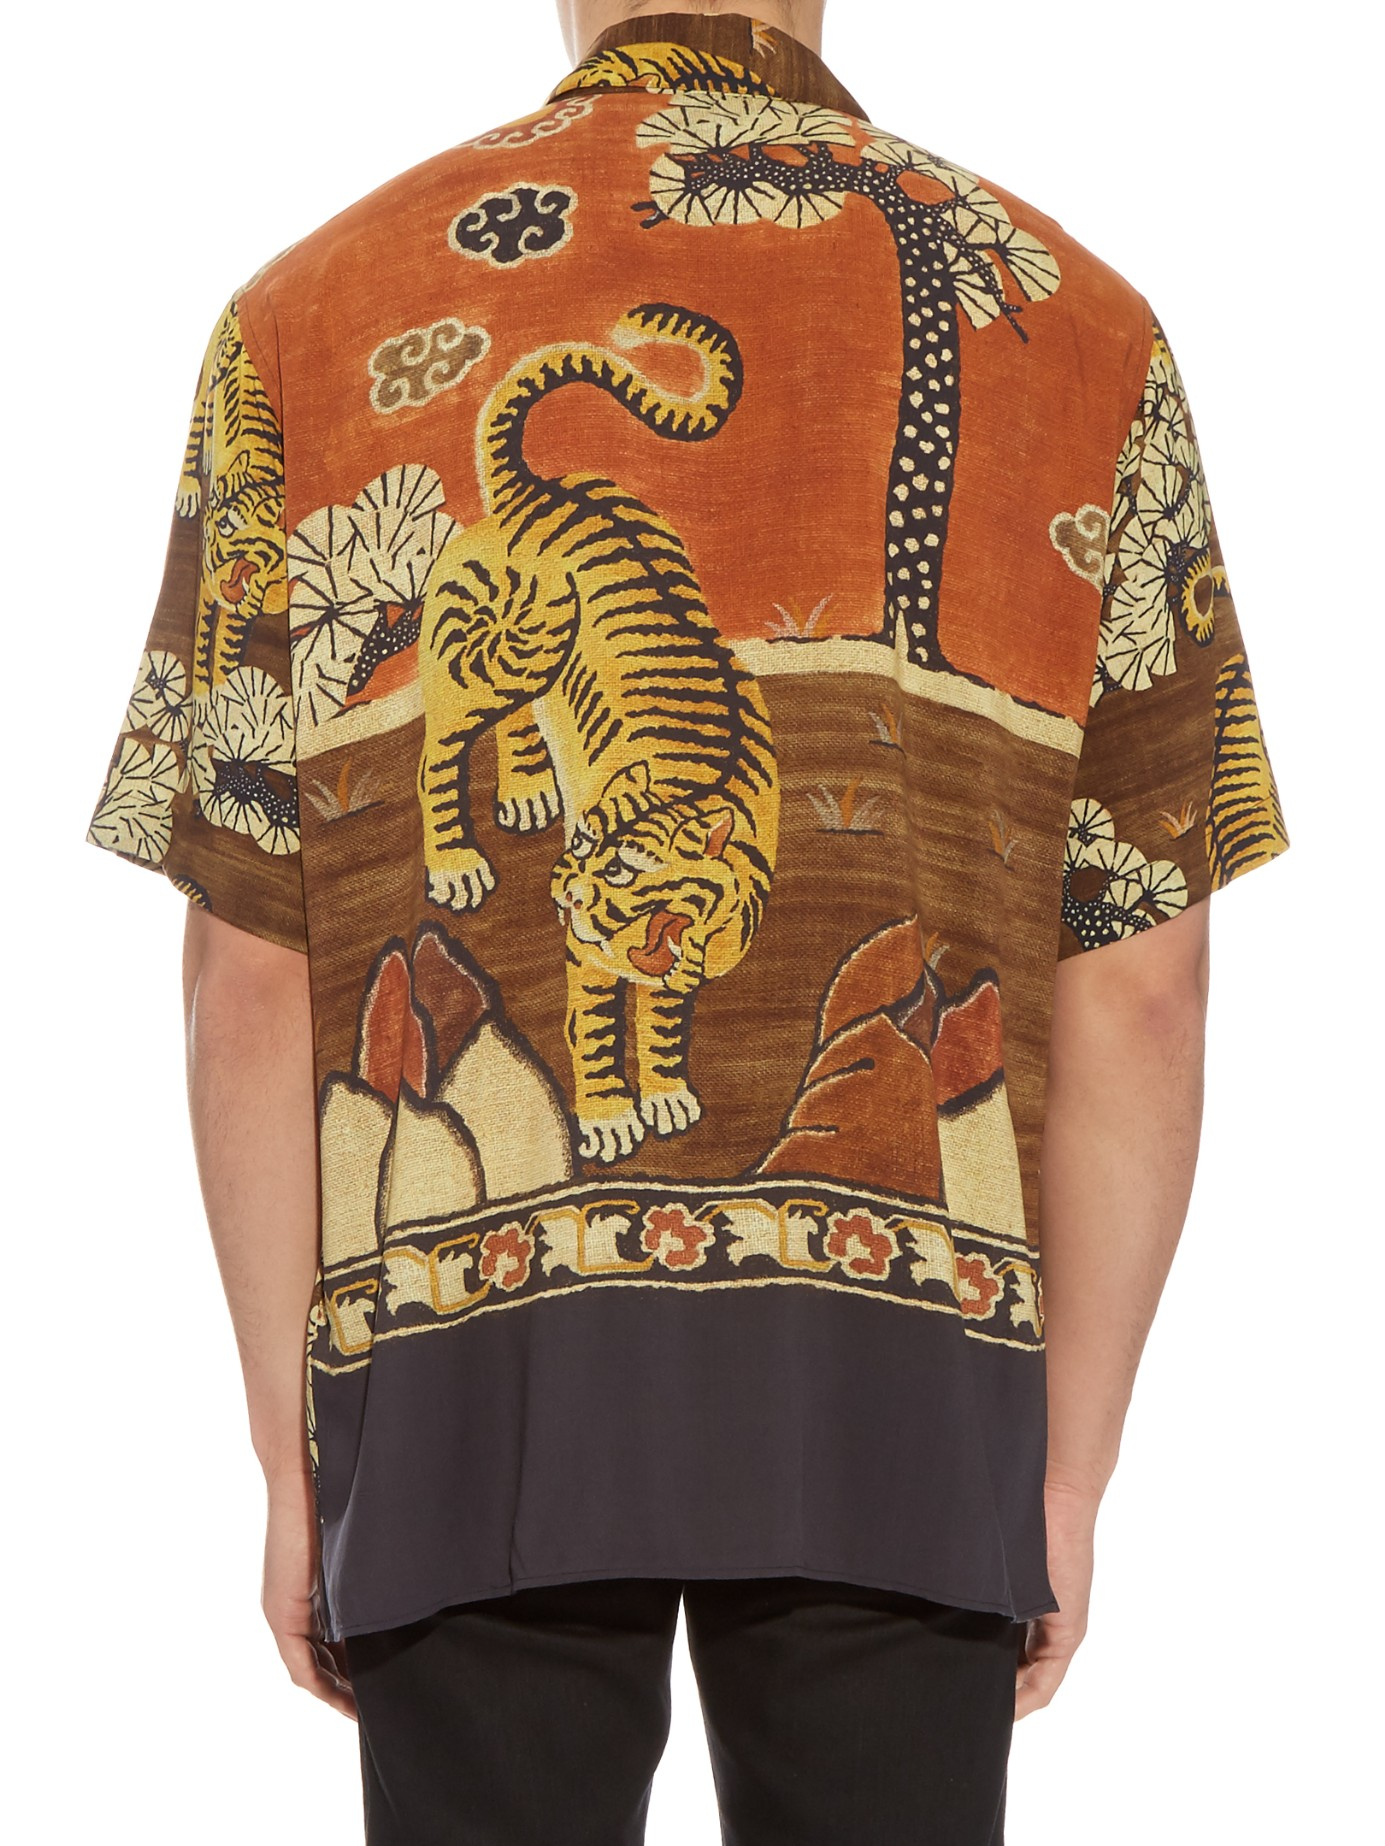 Gucci Tiger-Print Short-Sleeved Shirt in Natural for Men - Lyst